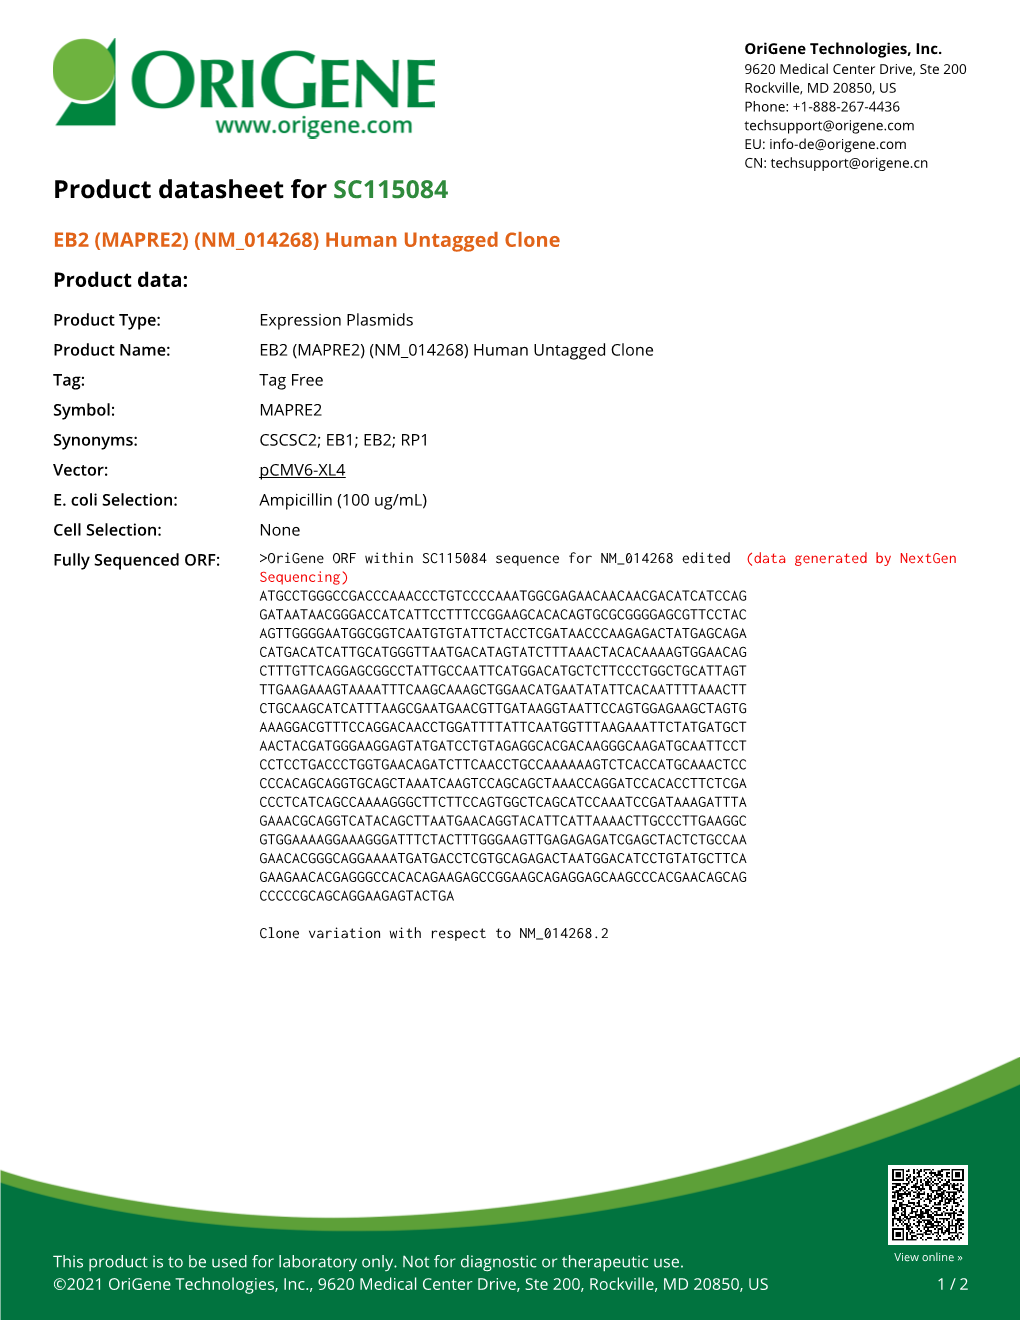 EB2 (MAPRE2) (NM 014268) Human Untagged Clone – SC115084